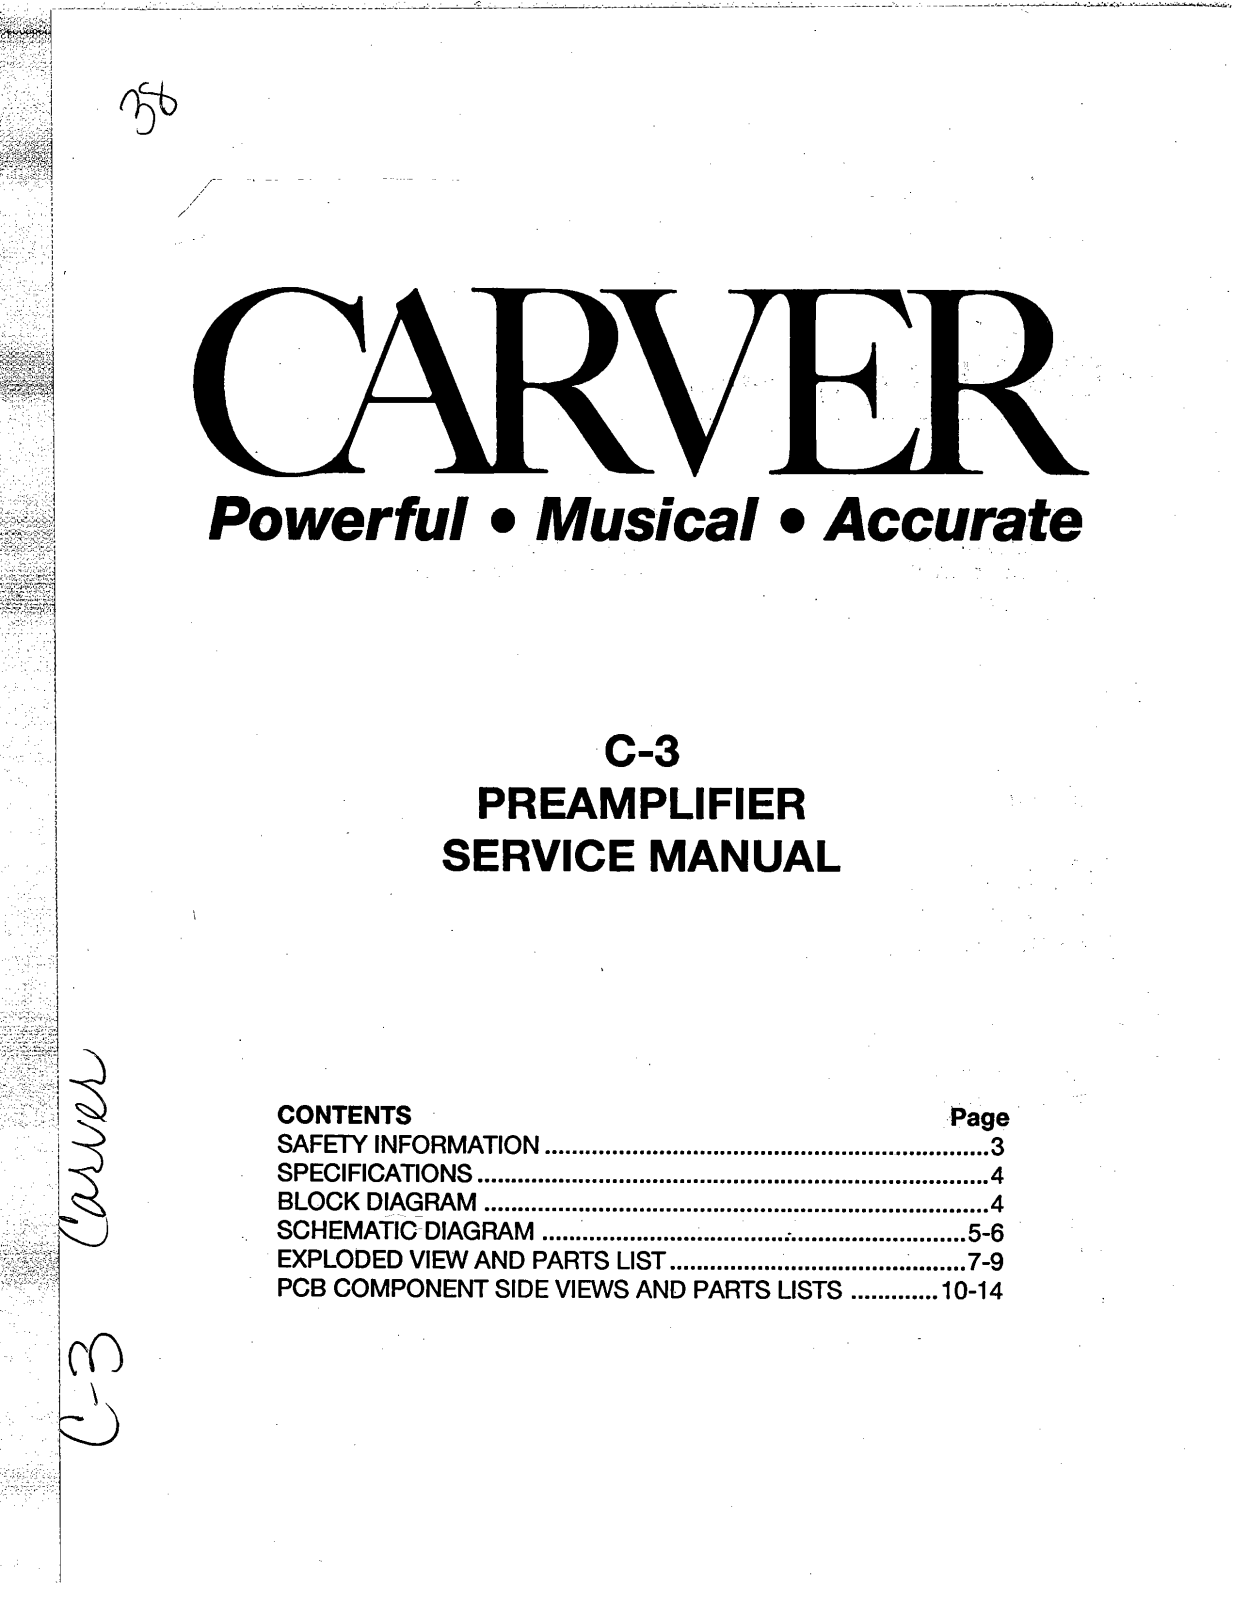 Carver C-3 Service manual